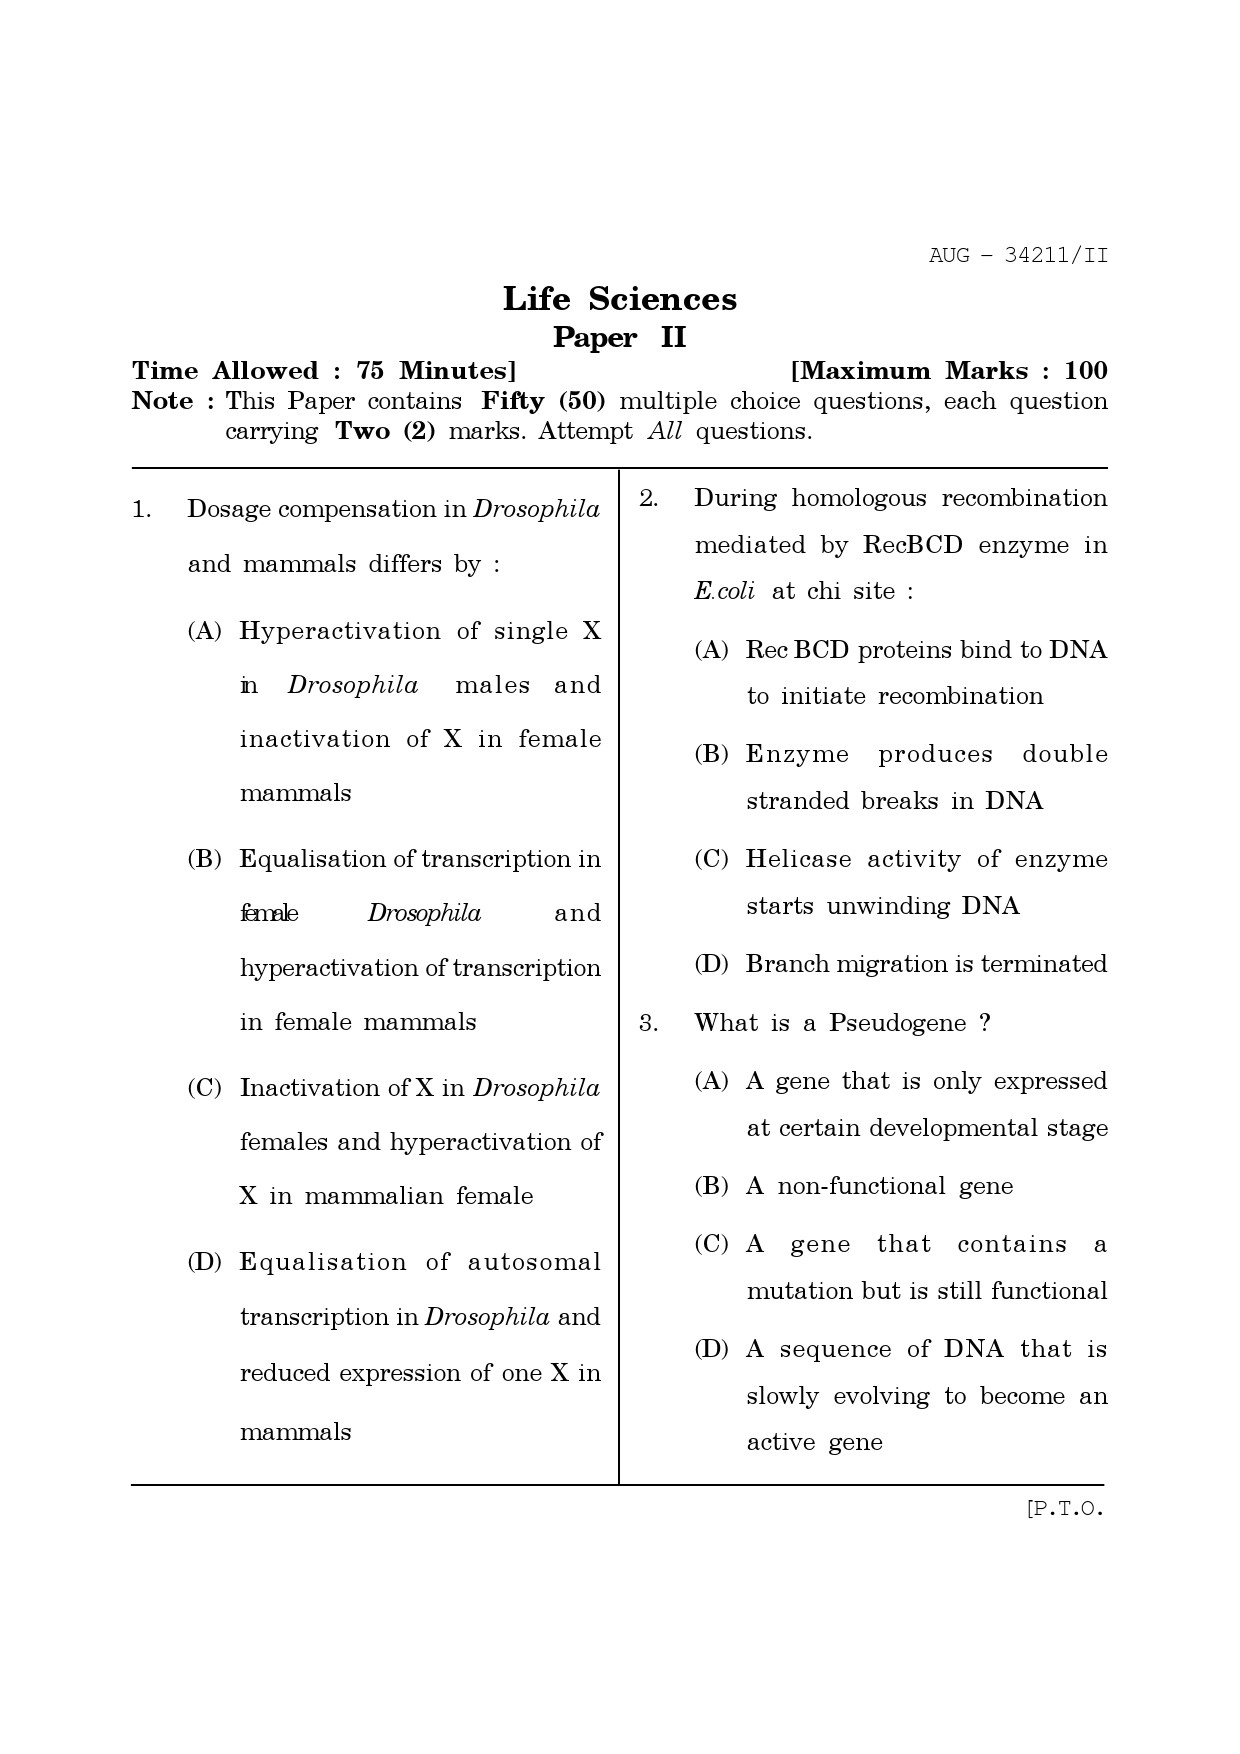 Maharashtra SET Life Sciences Question Paper II August 2011 1